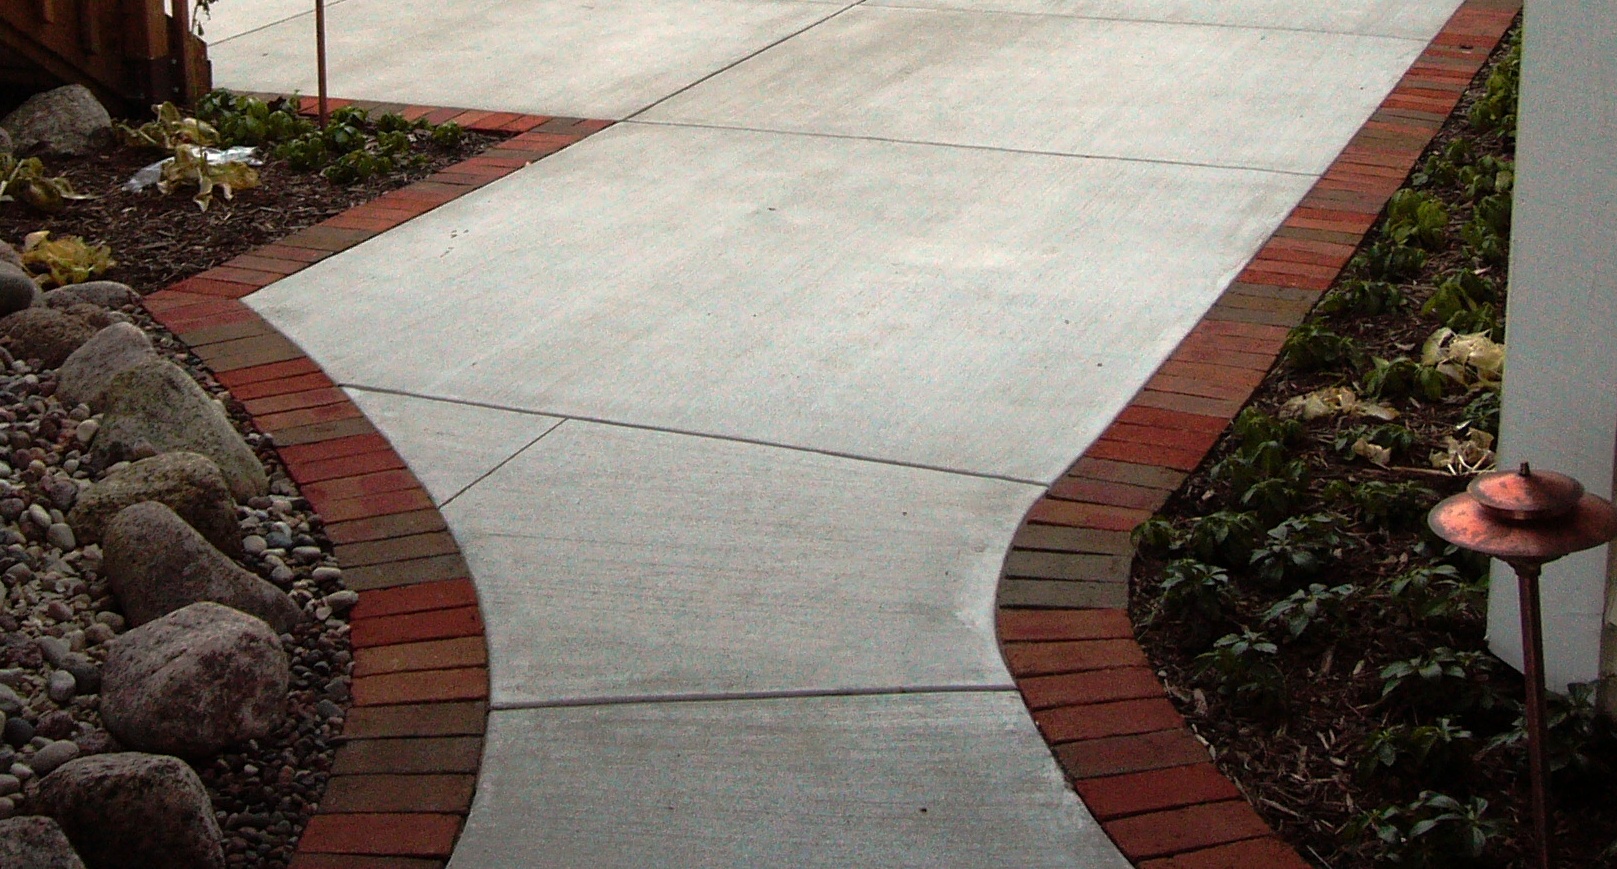 Brick edging along concrete makes a sidewalk more visually appealing.